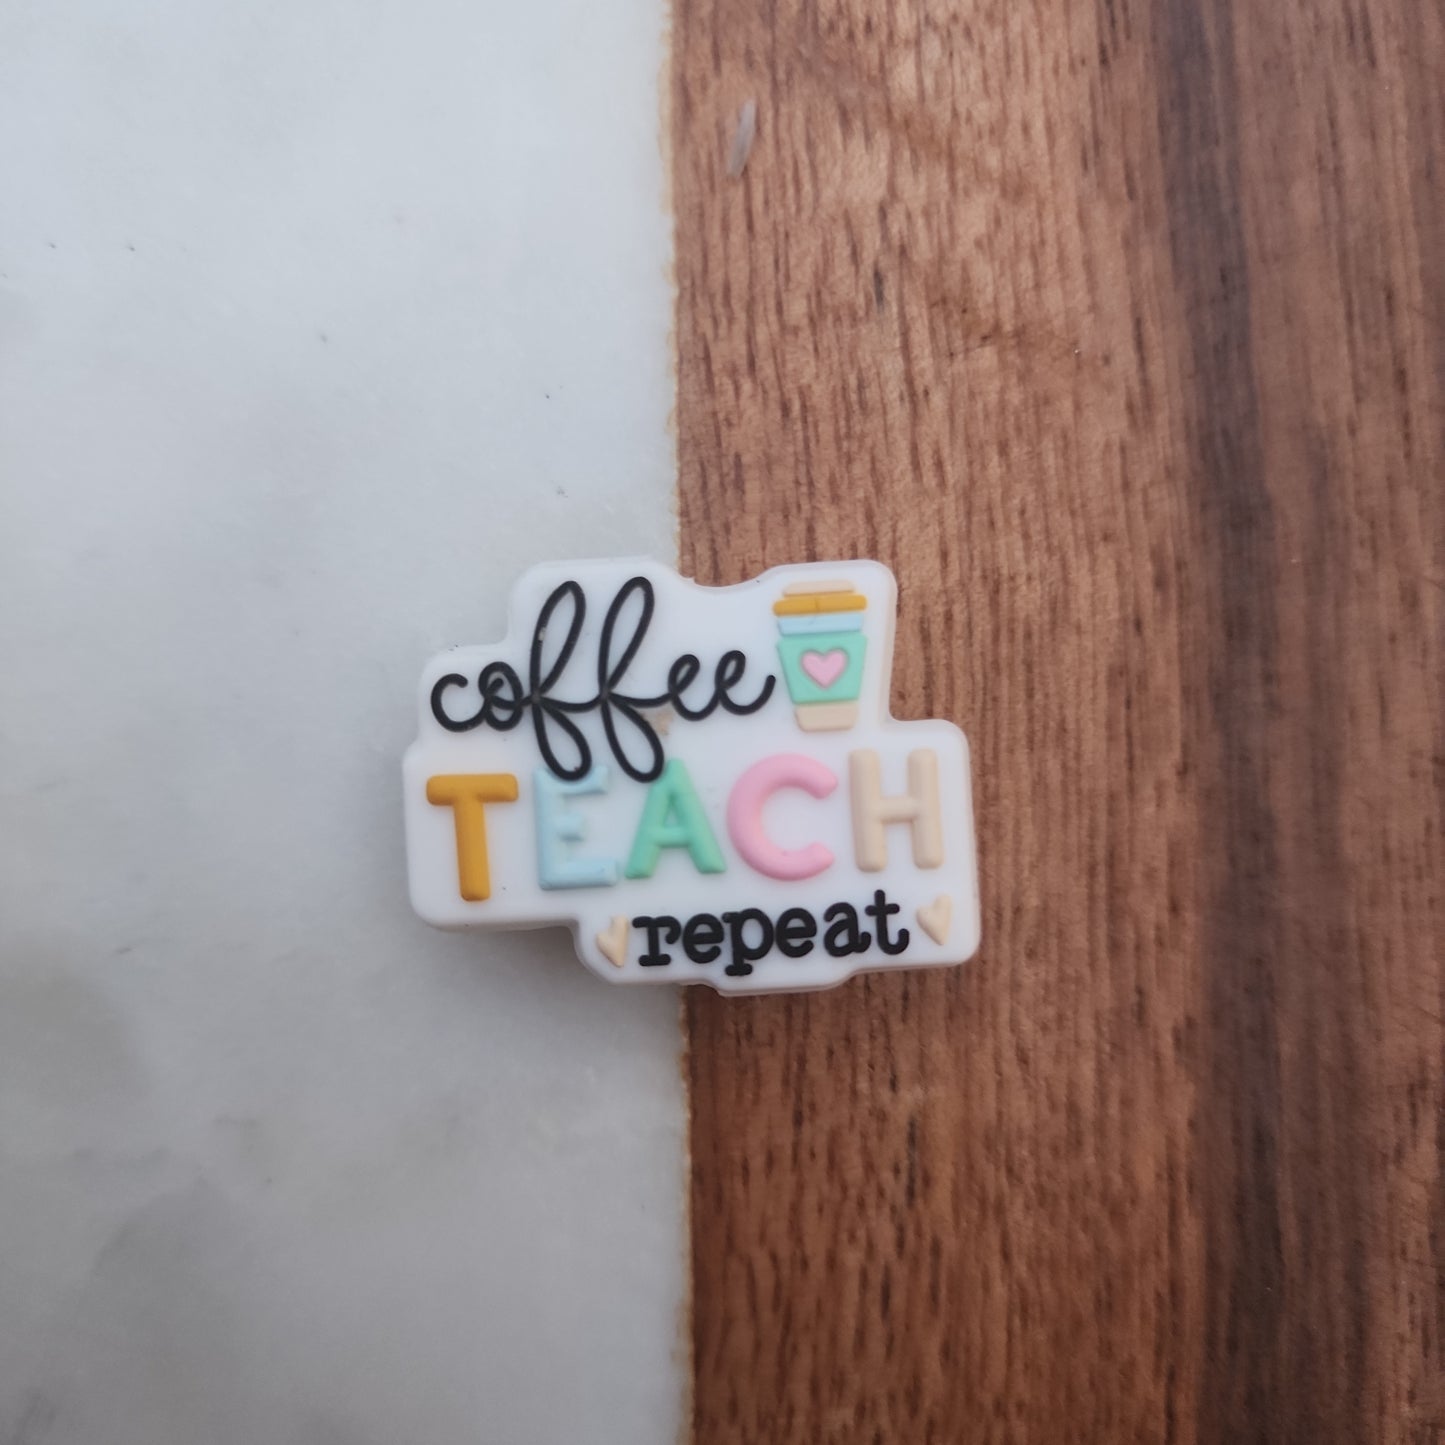 Coffee teach repeat pastel